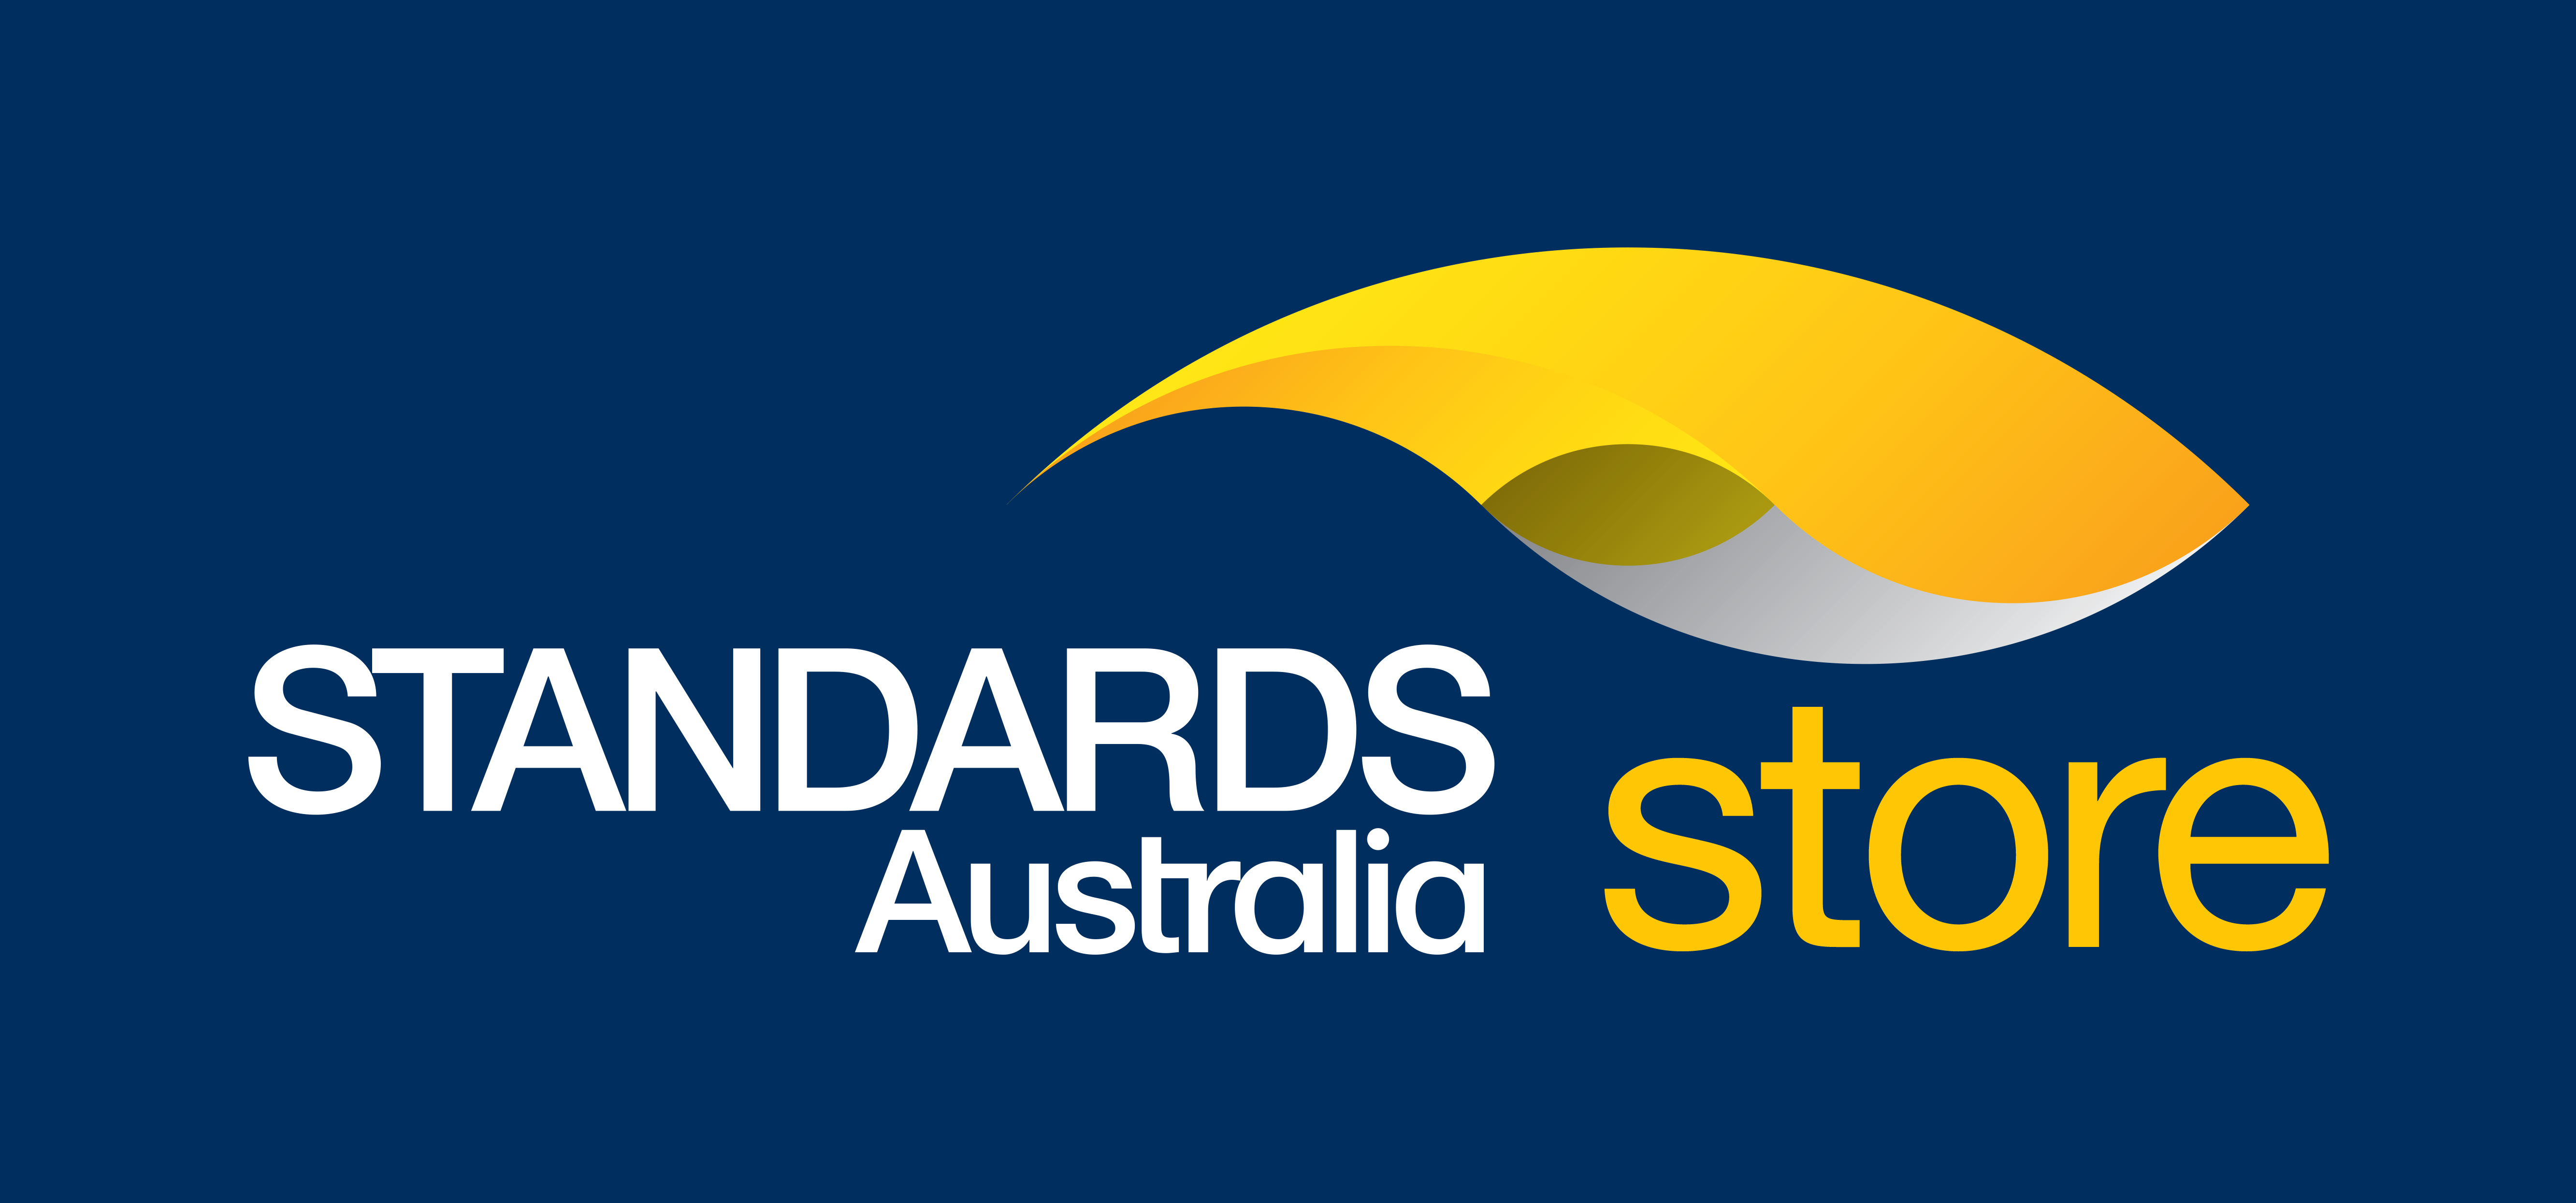 Standards Australia Store